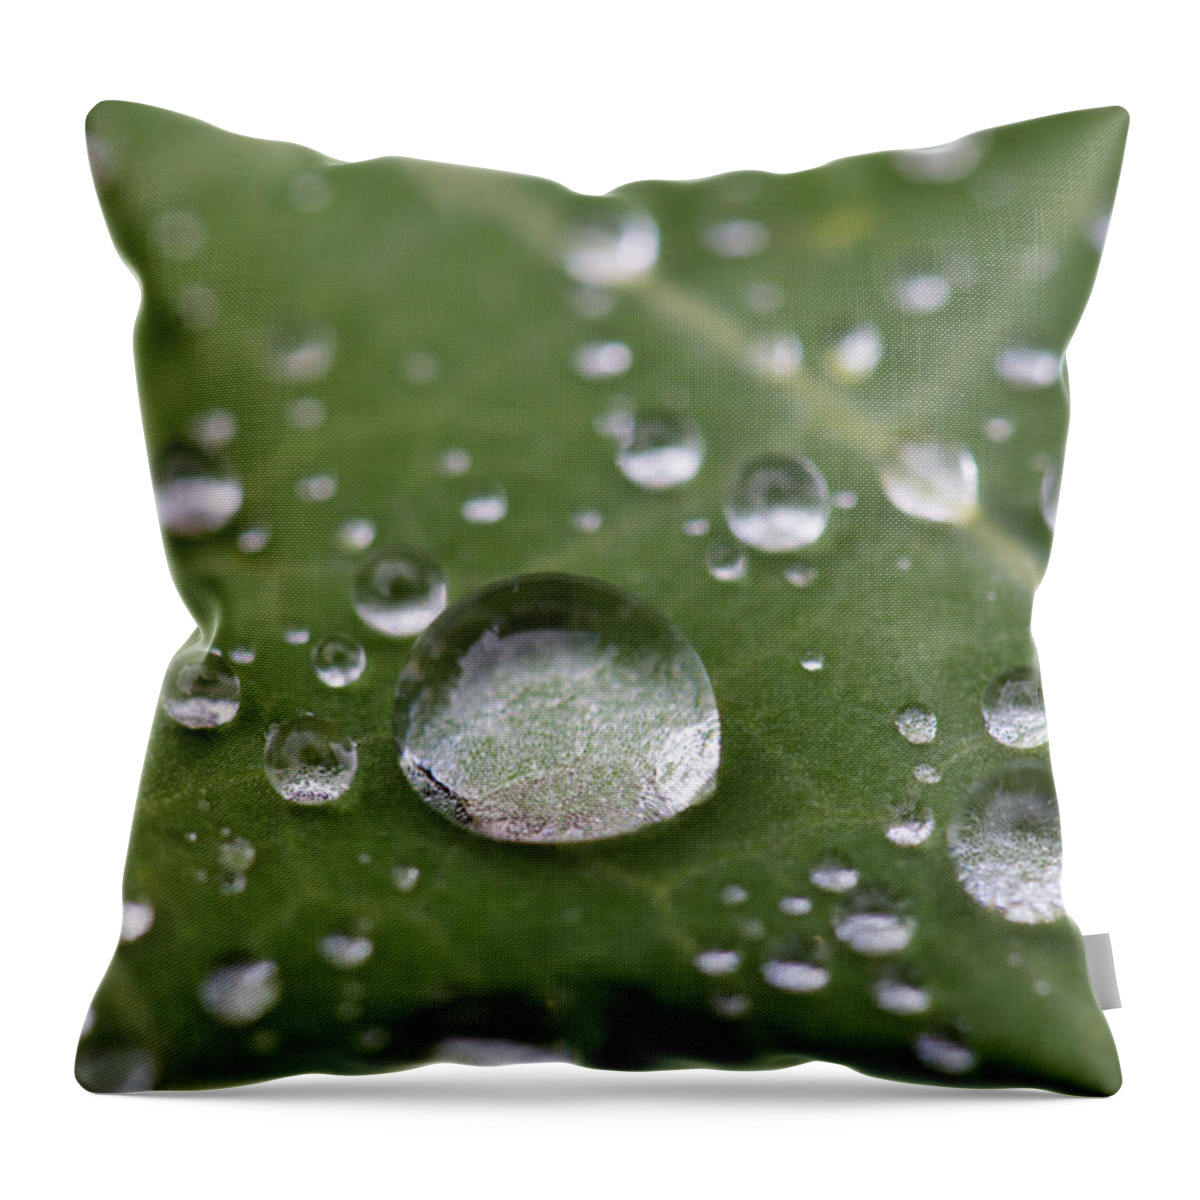 Macro Throw Pillow featuring the photograph A city of water drops by Matt McDonald